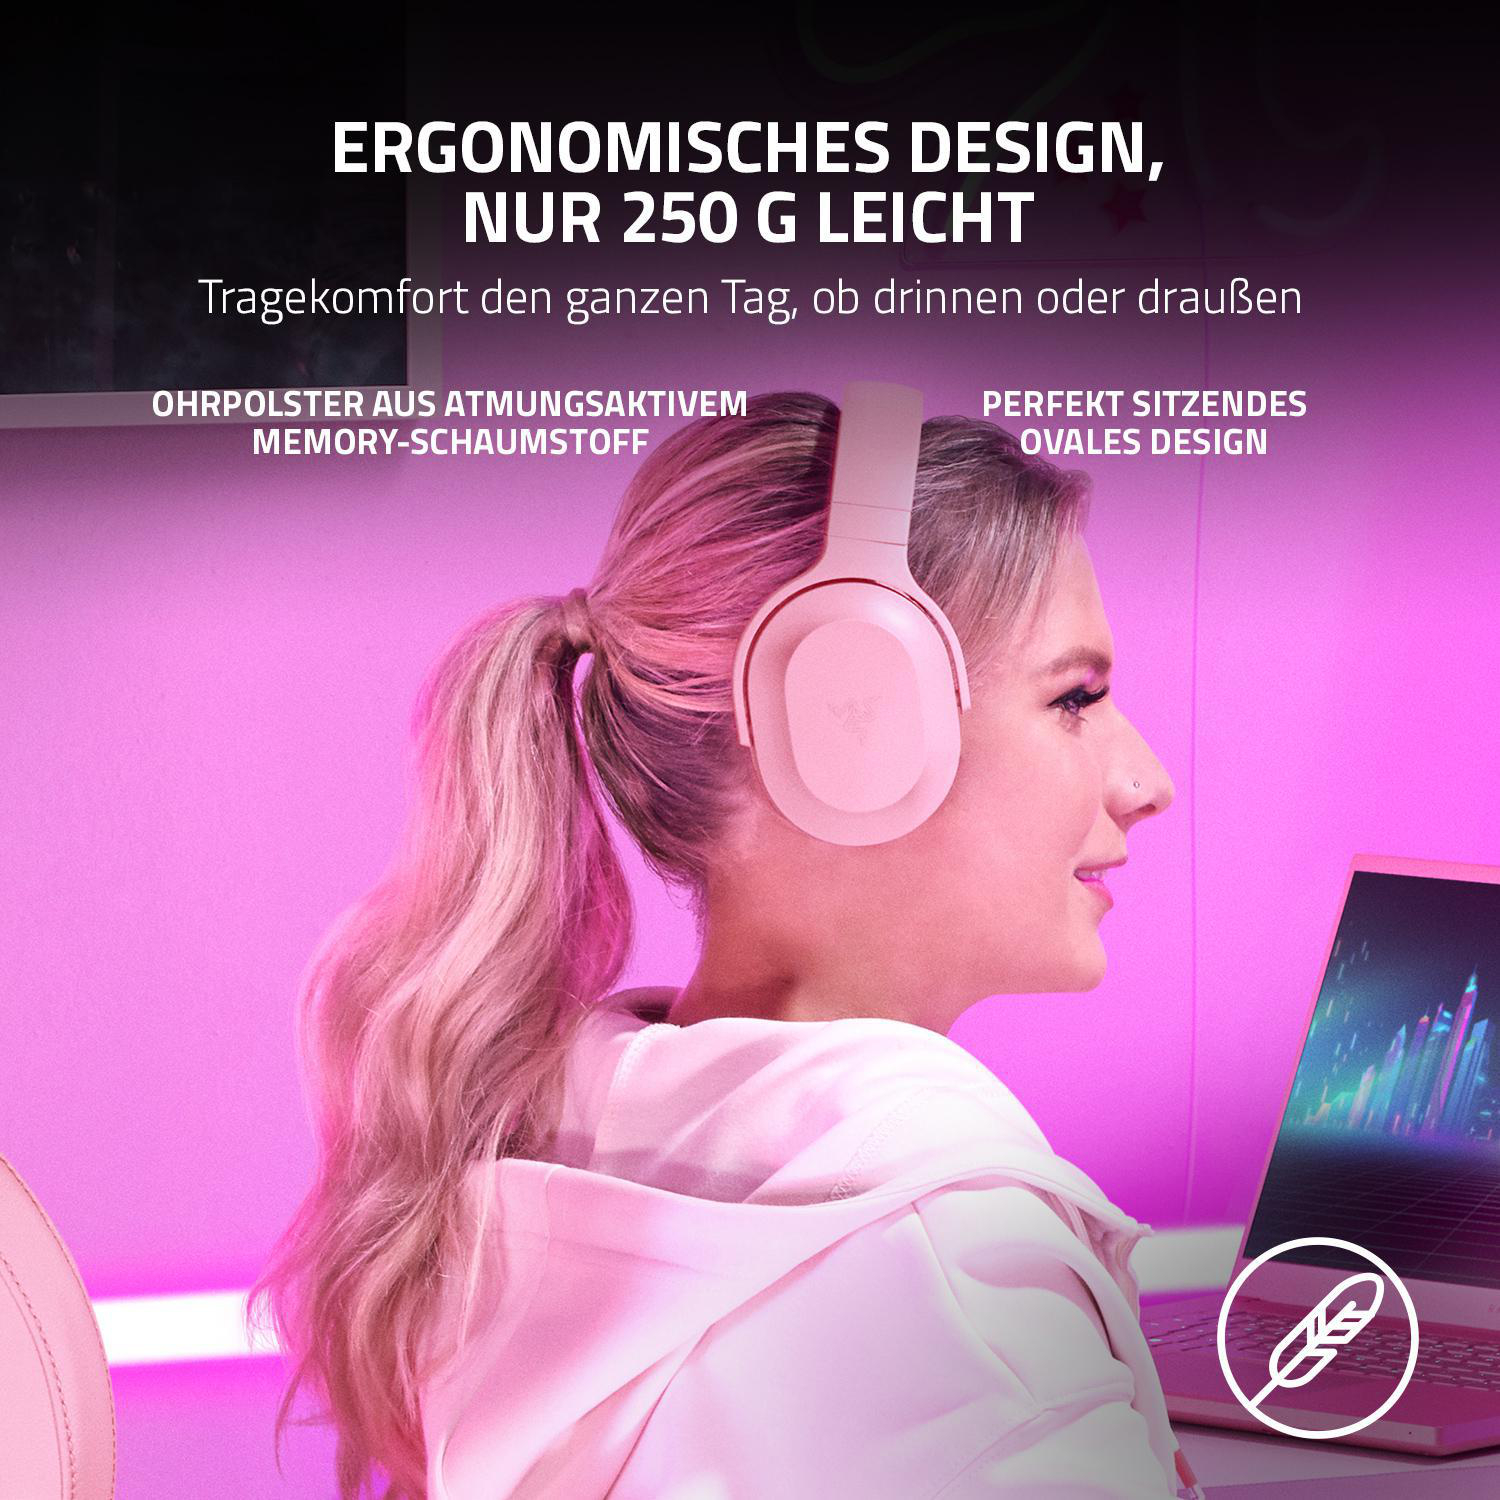 RAZER Barracuda Gaming Pink Over-ear Quartz Headset Bluetooth X